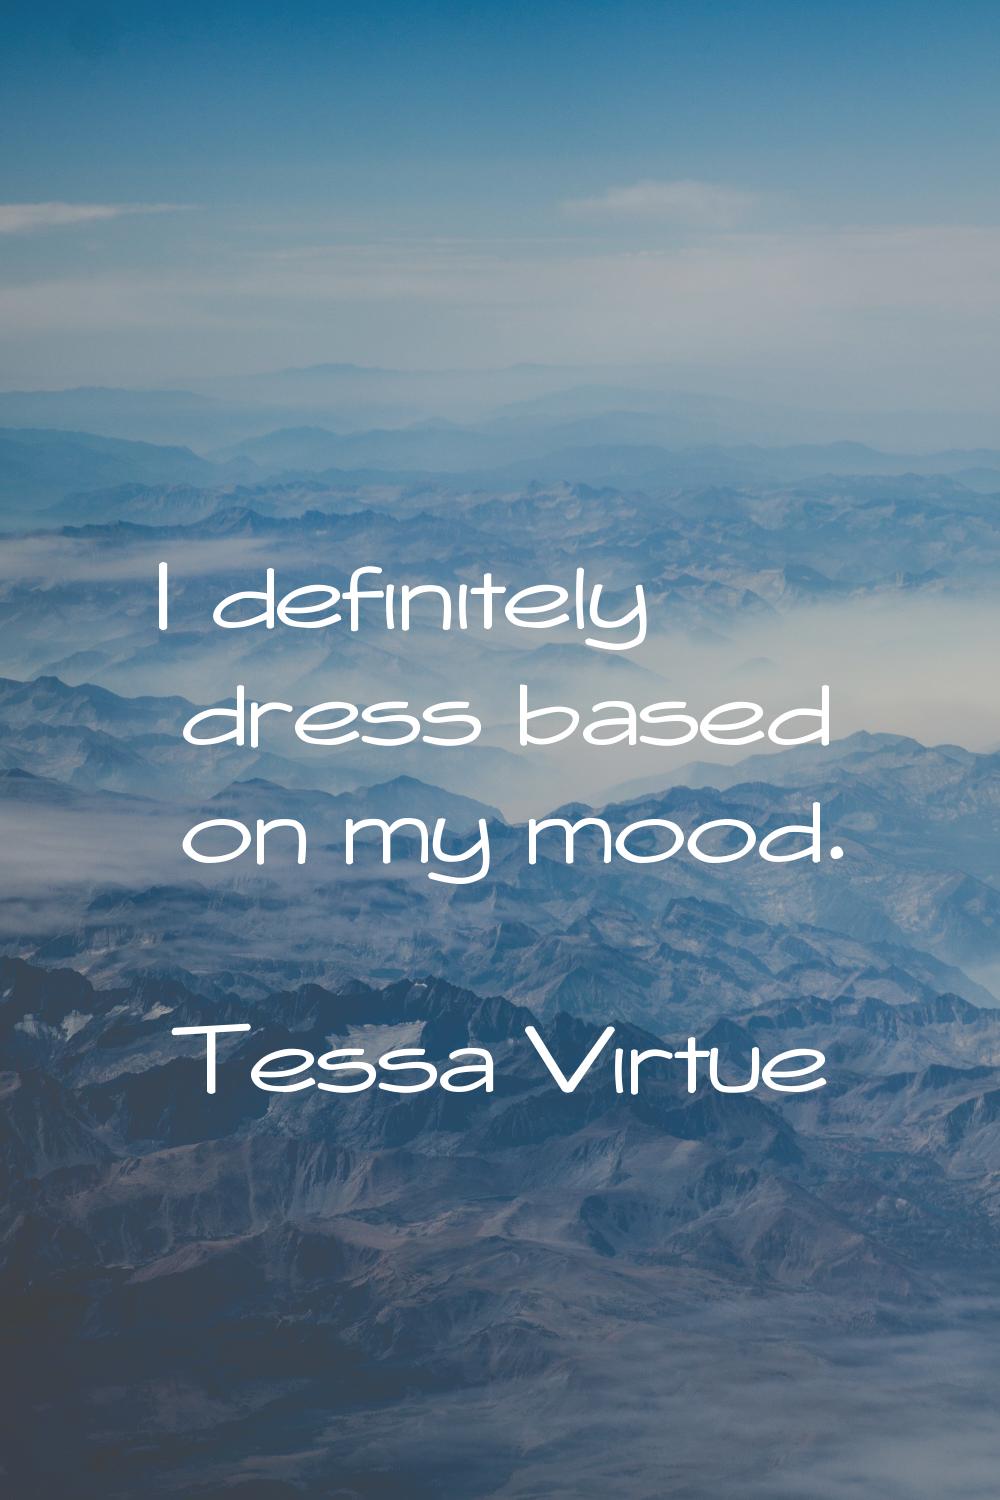 I definitely dress based on my mood.